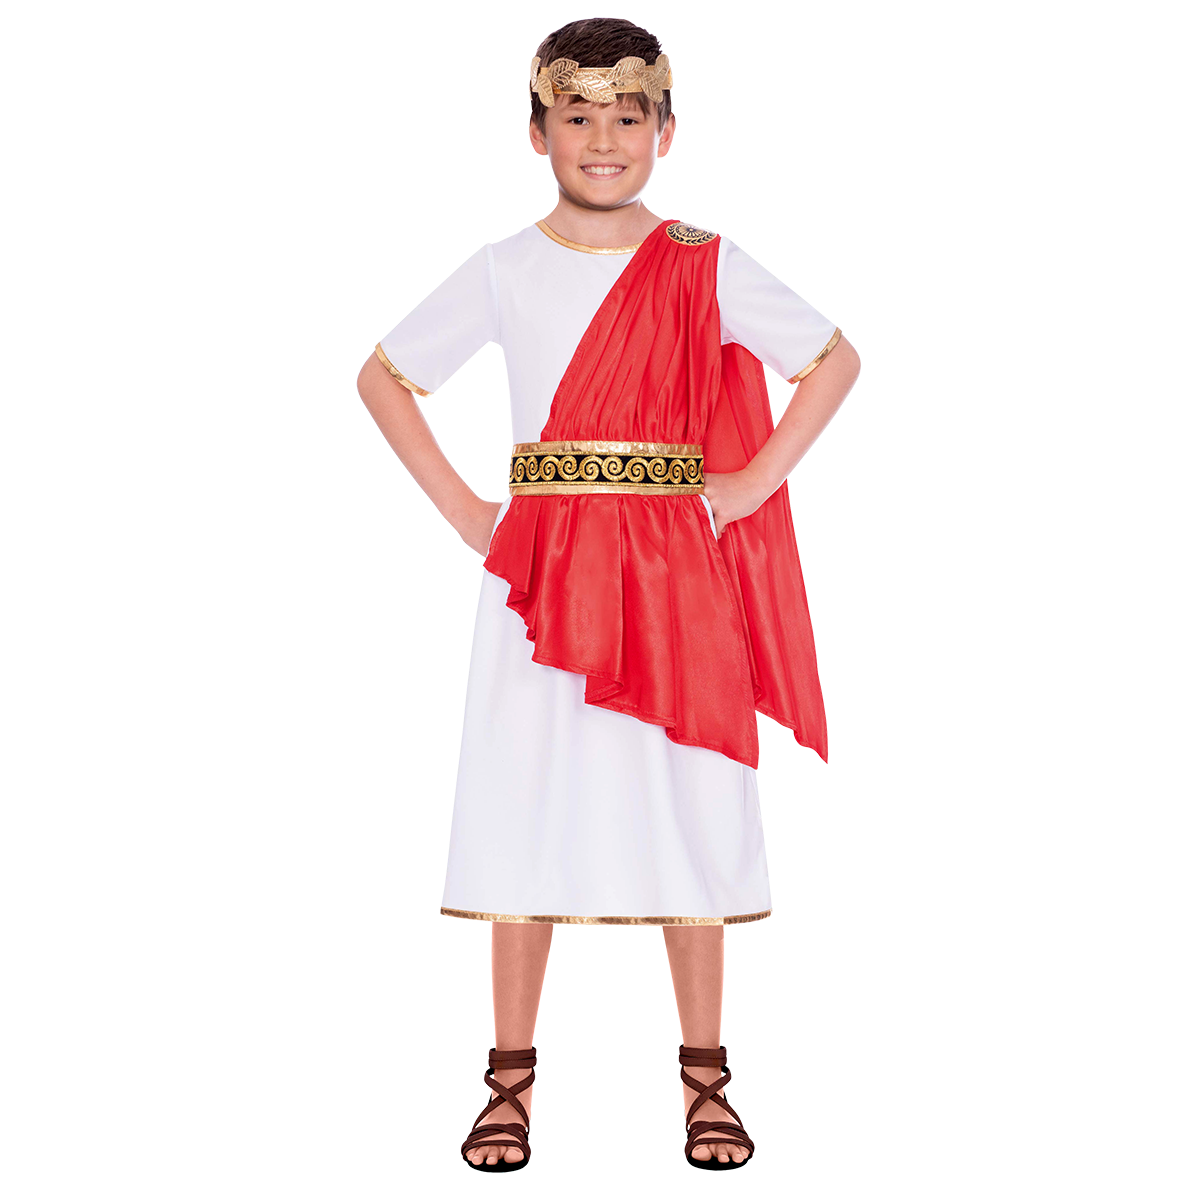 Child Roman Boy Costume - Party Centre